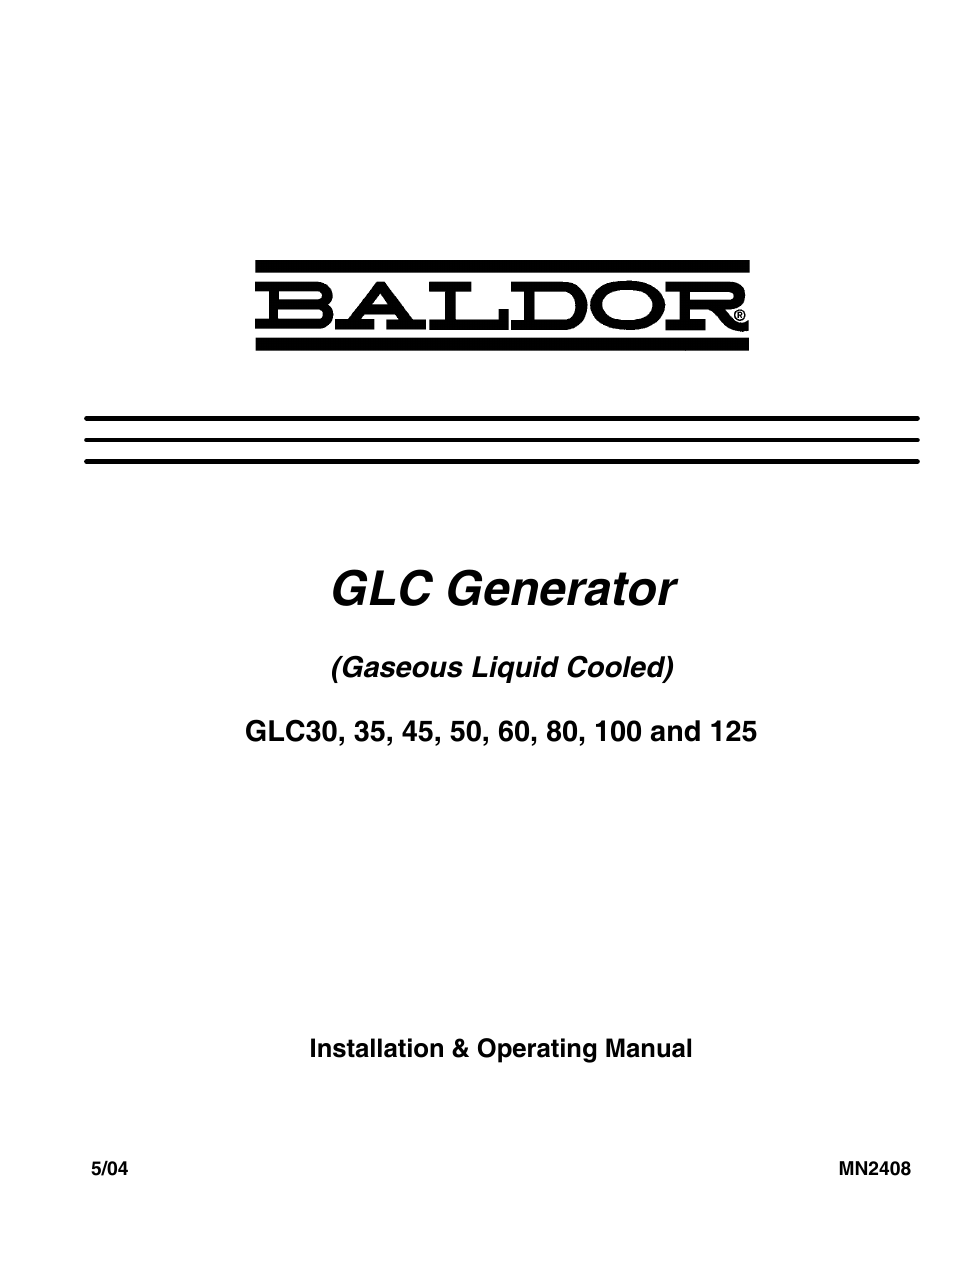 GLC GENERATOR GLC60